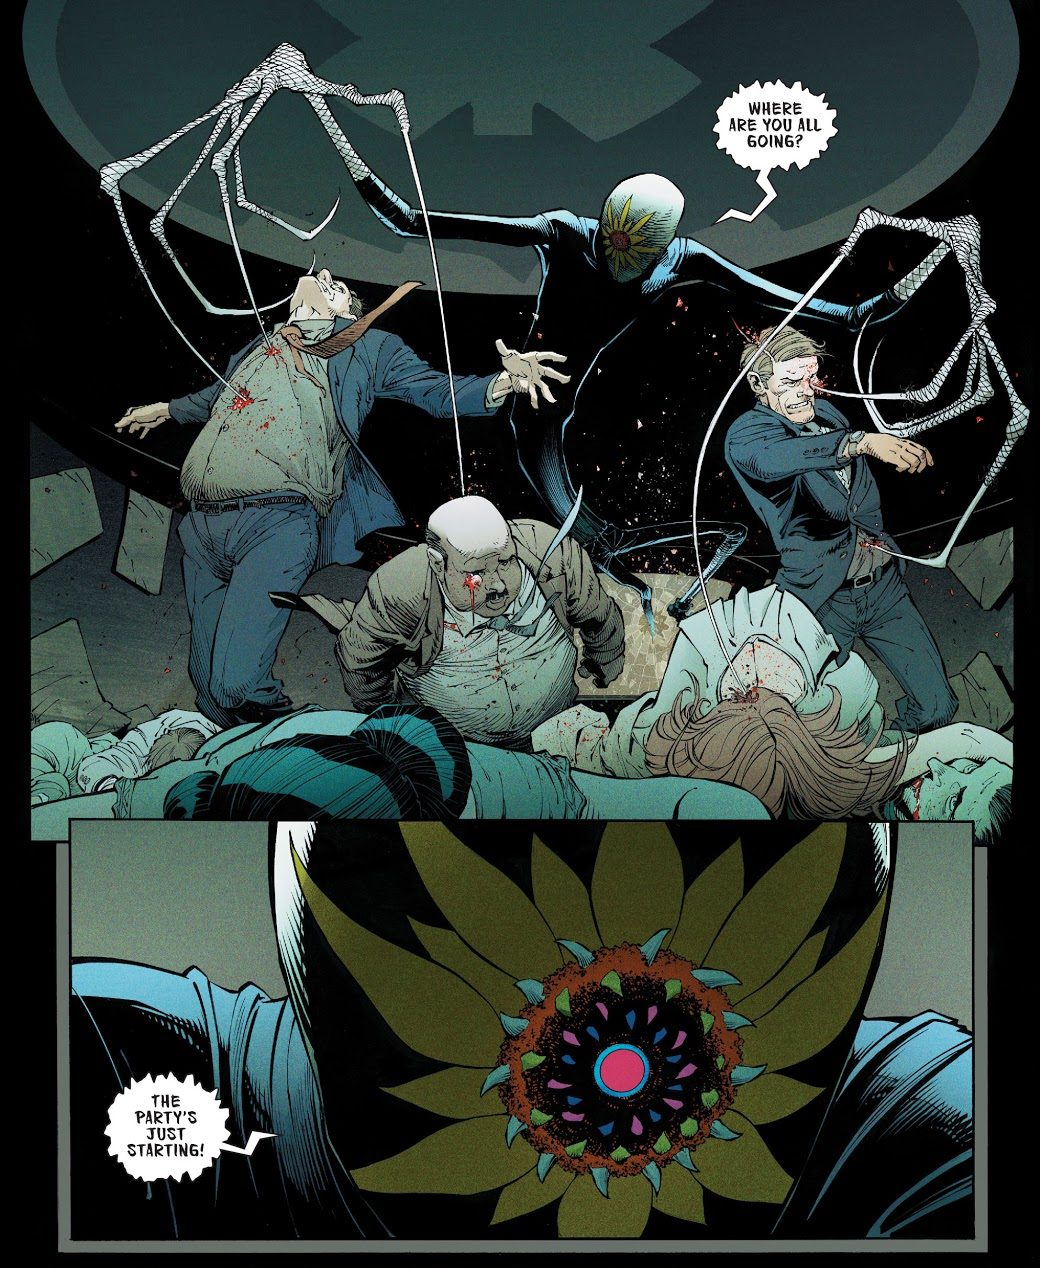 Mister Bloom (Batman Vol. 2 #45)